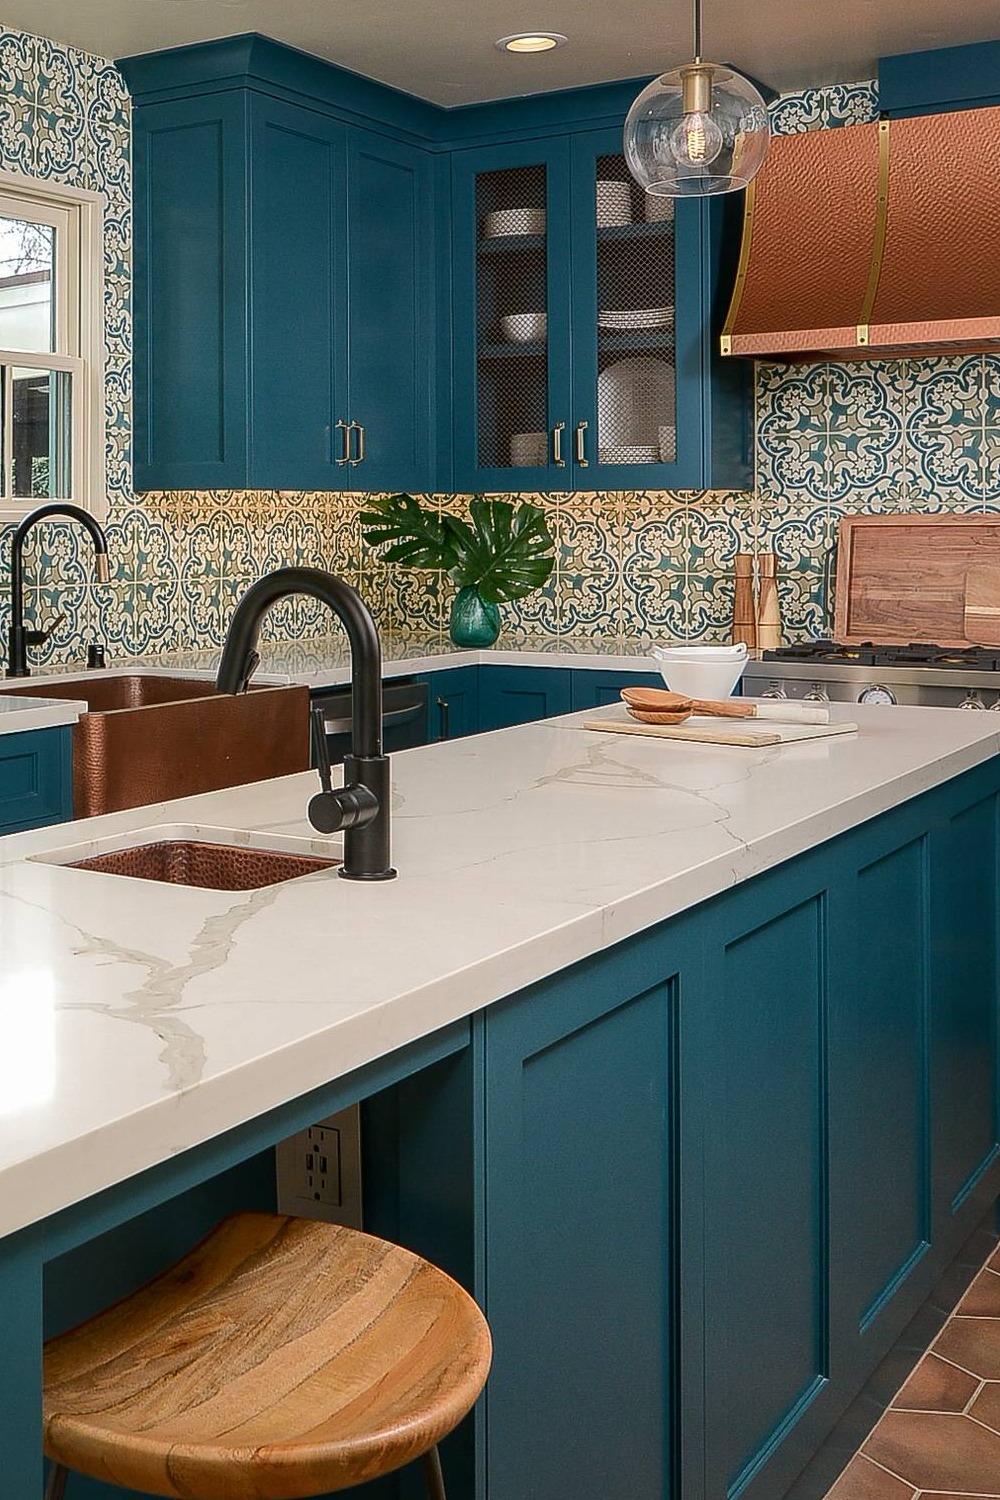 Green Cabinets Cement Tiles Mediterranean Kitchen Tile Elegant Squares Opt